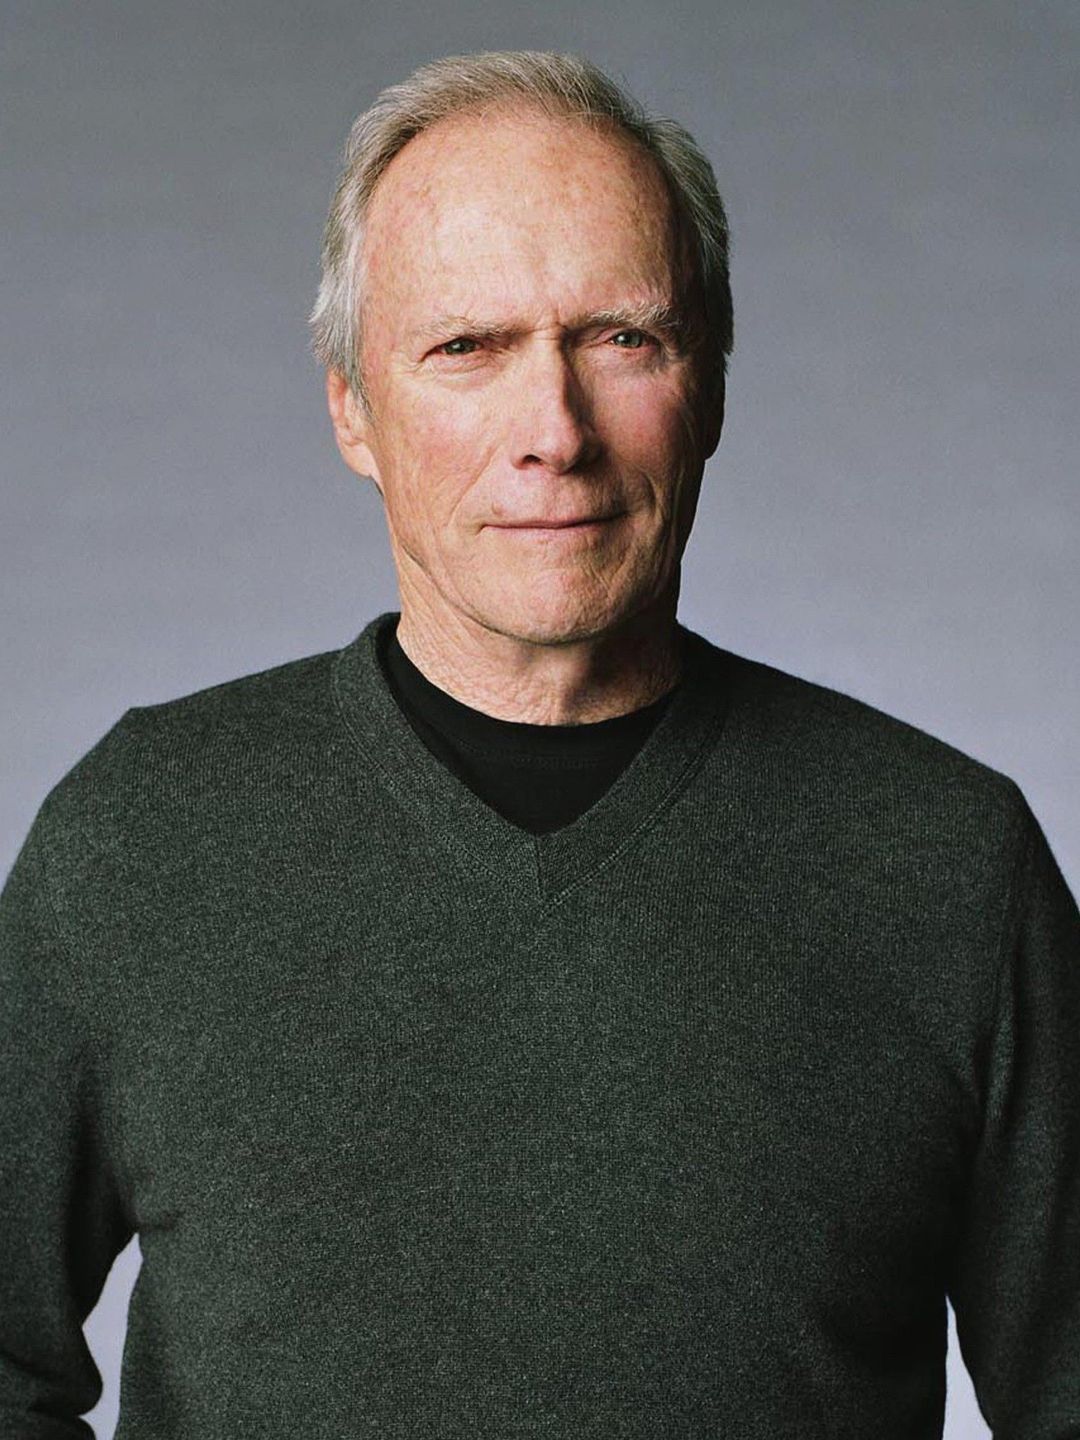 Clint Eastwood appearance